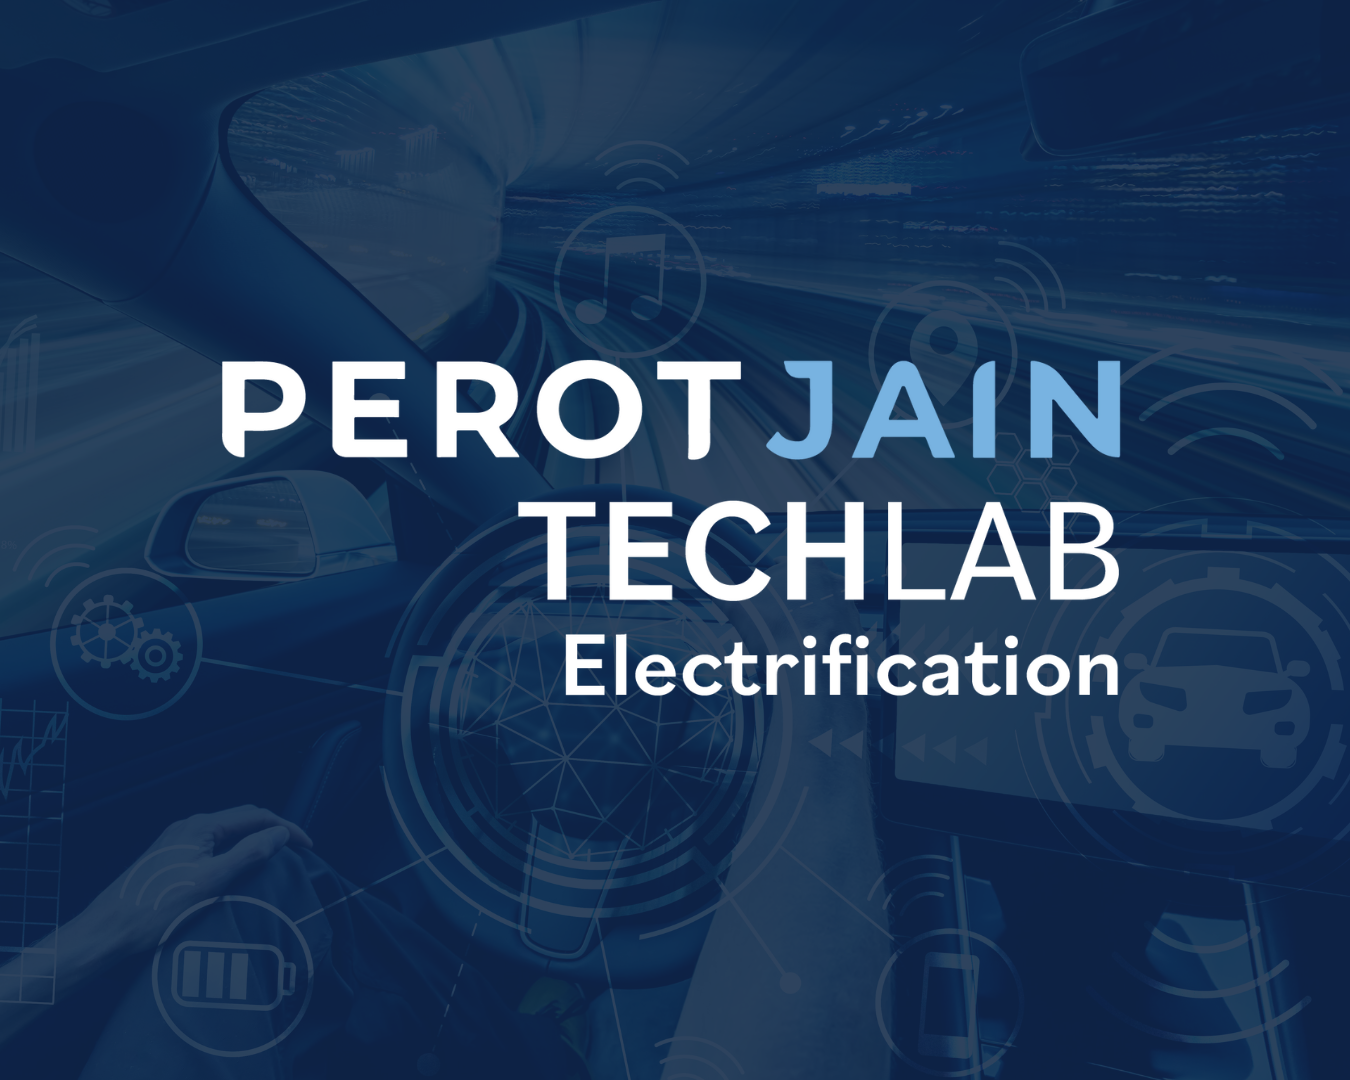 Perot Jain TechLab Electrification